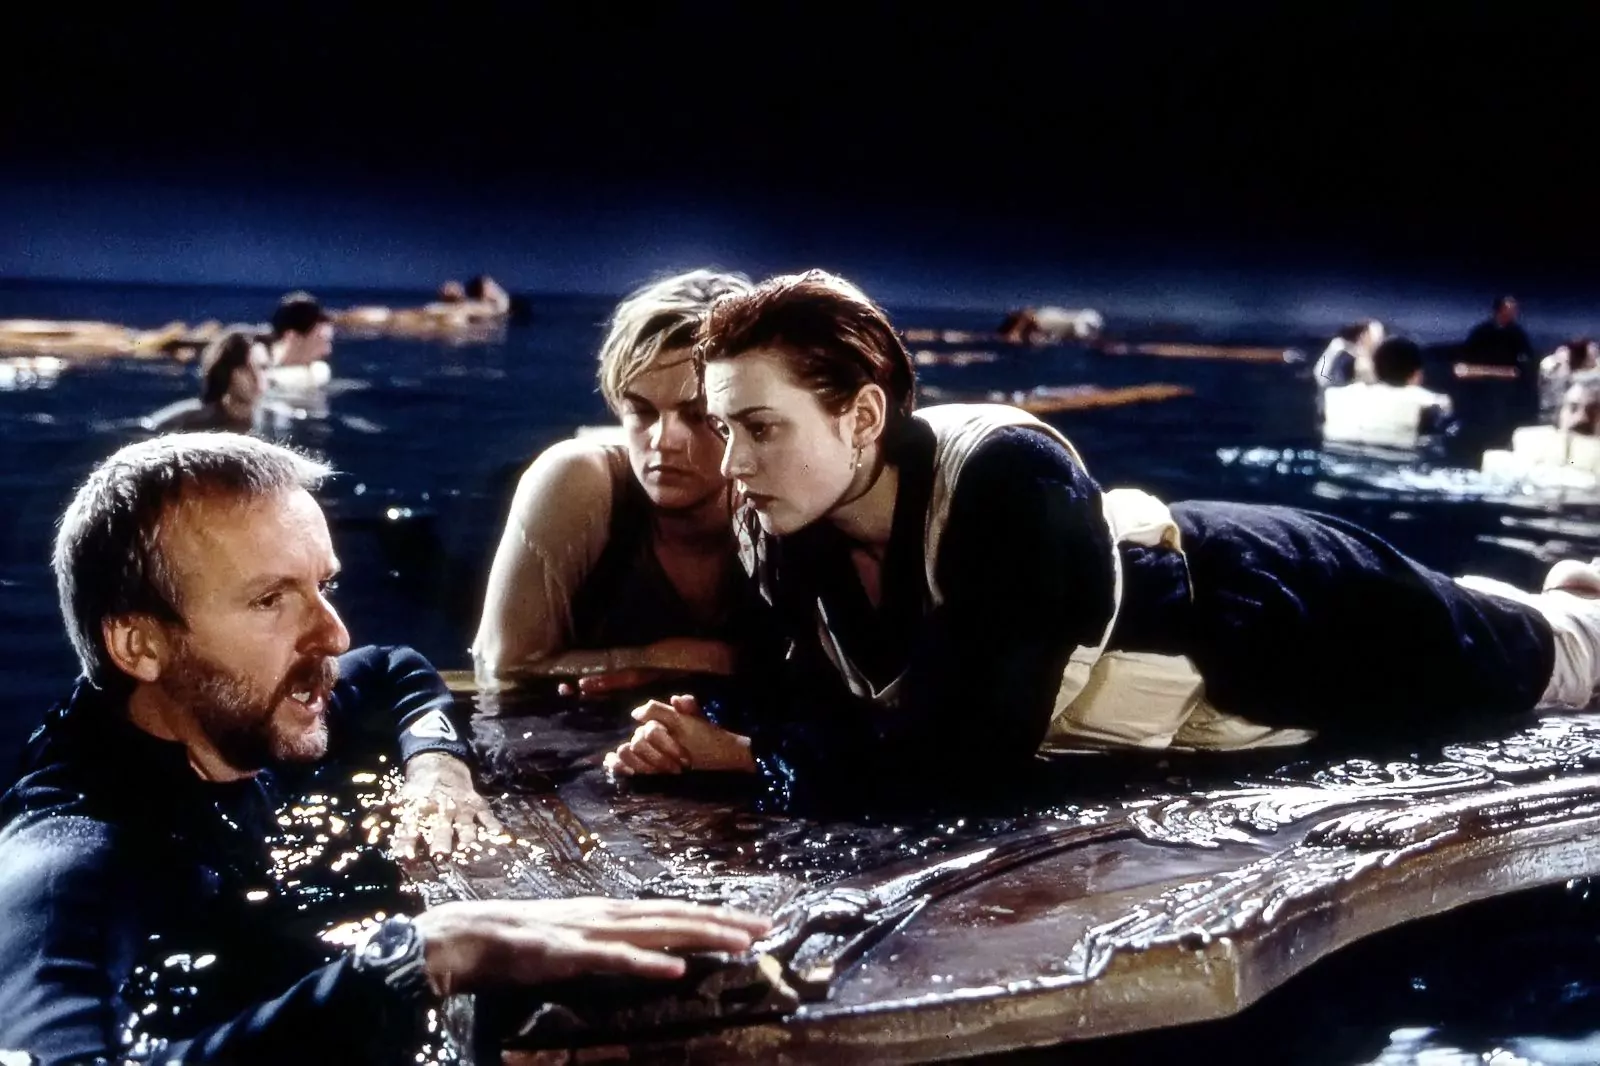 Джеймс Кэмерон, Леонардо Ди Каприо и Кейт Уинслет на съемочной площадке фильма «Титаник», 1997 г.